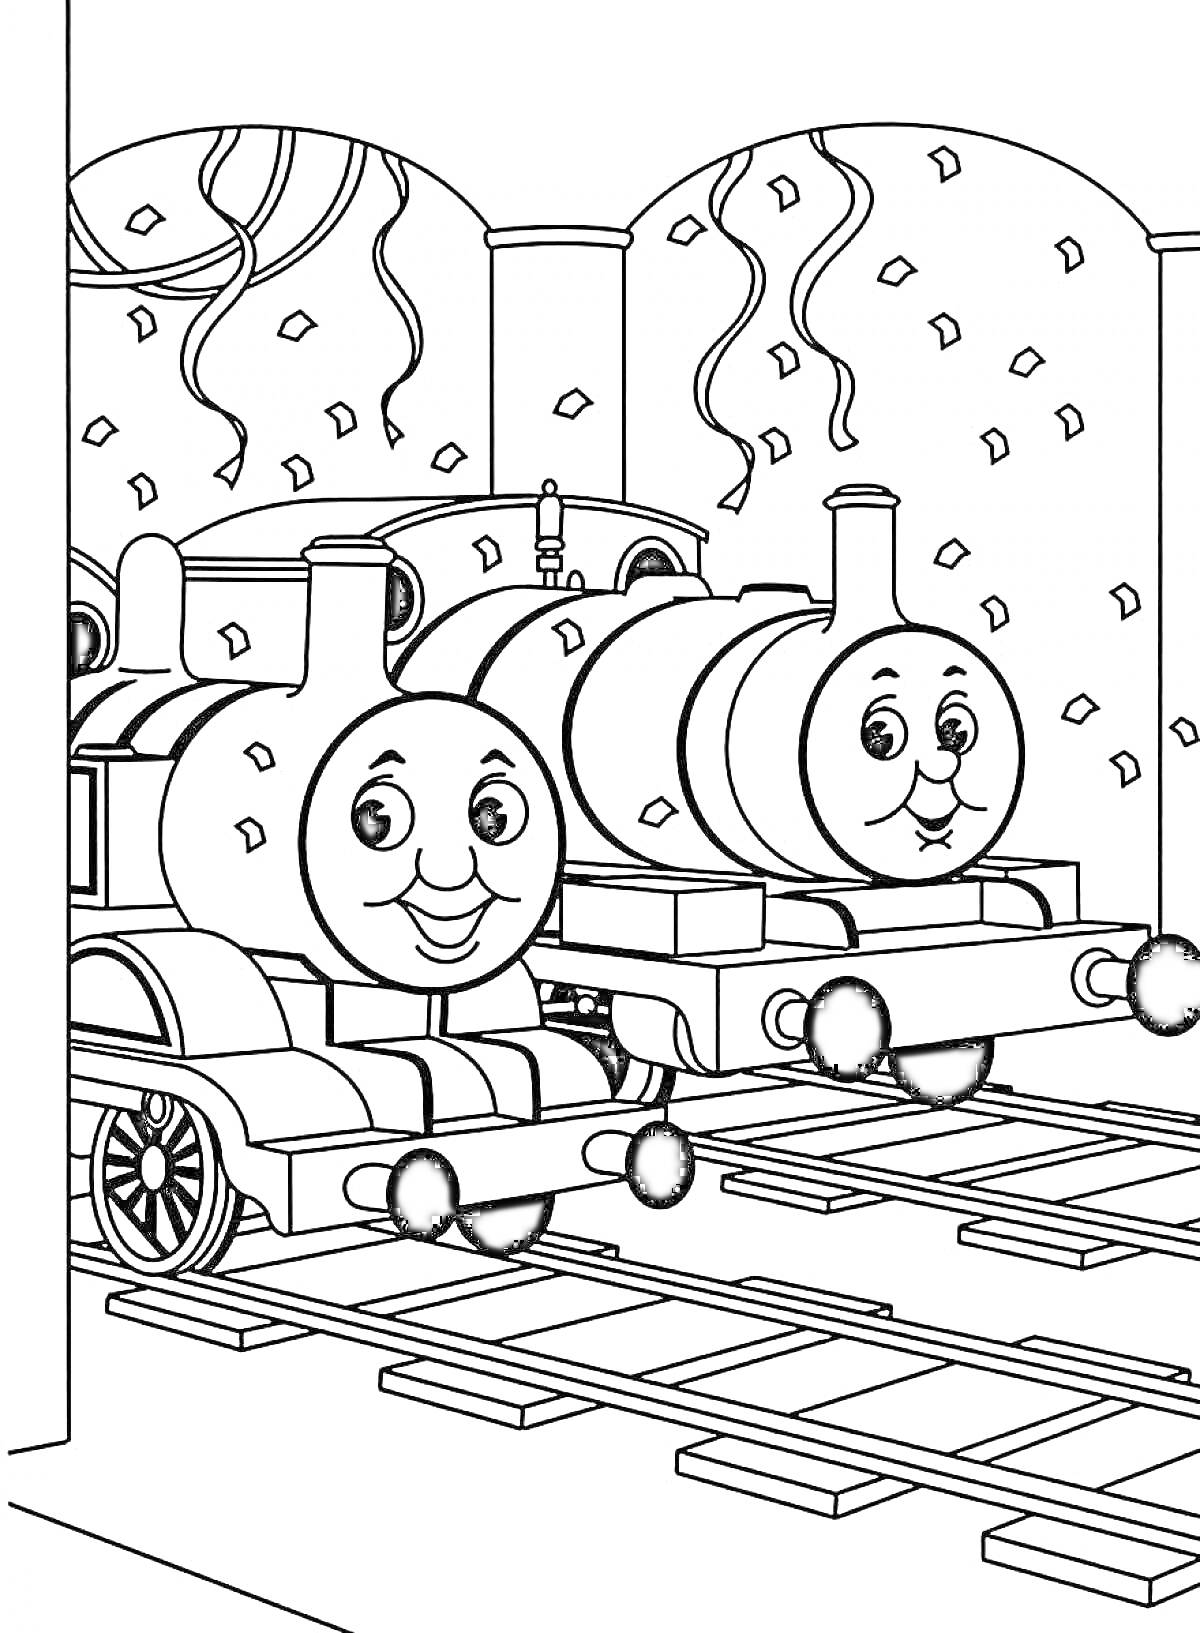 Раскраска Паровозики Томас и его друг на станции с летающими конфетти